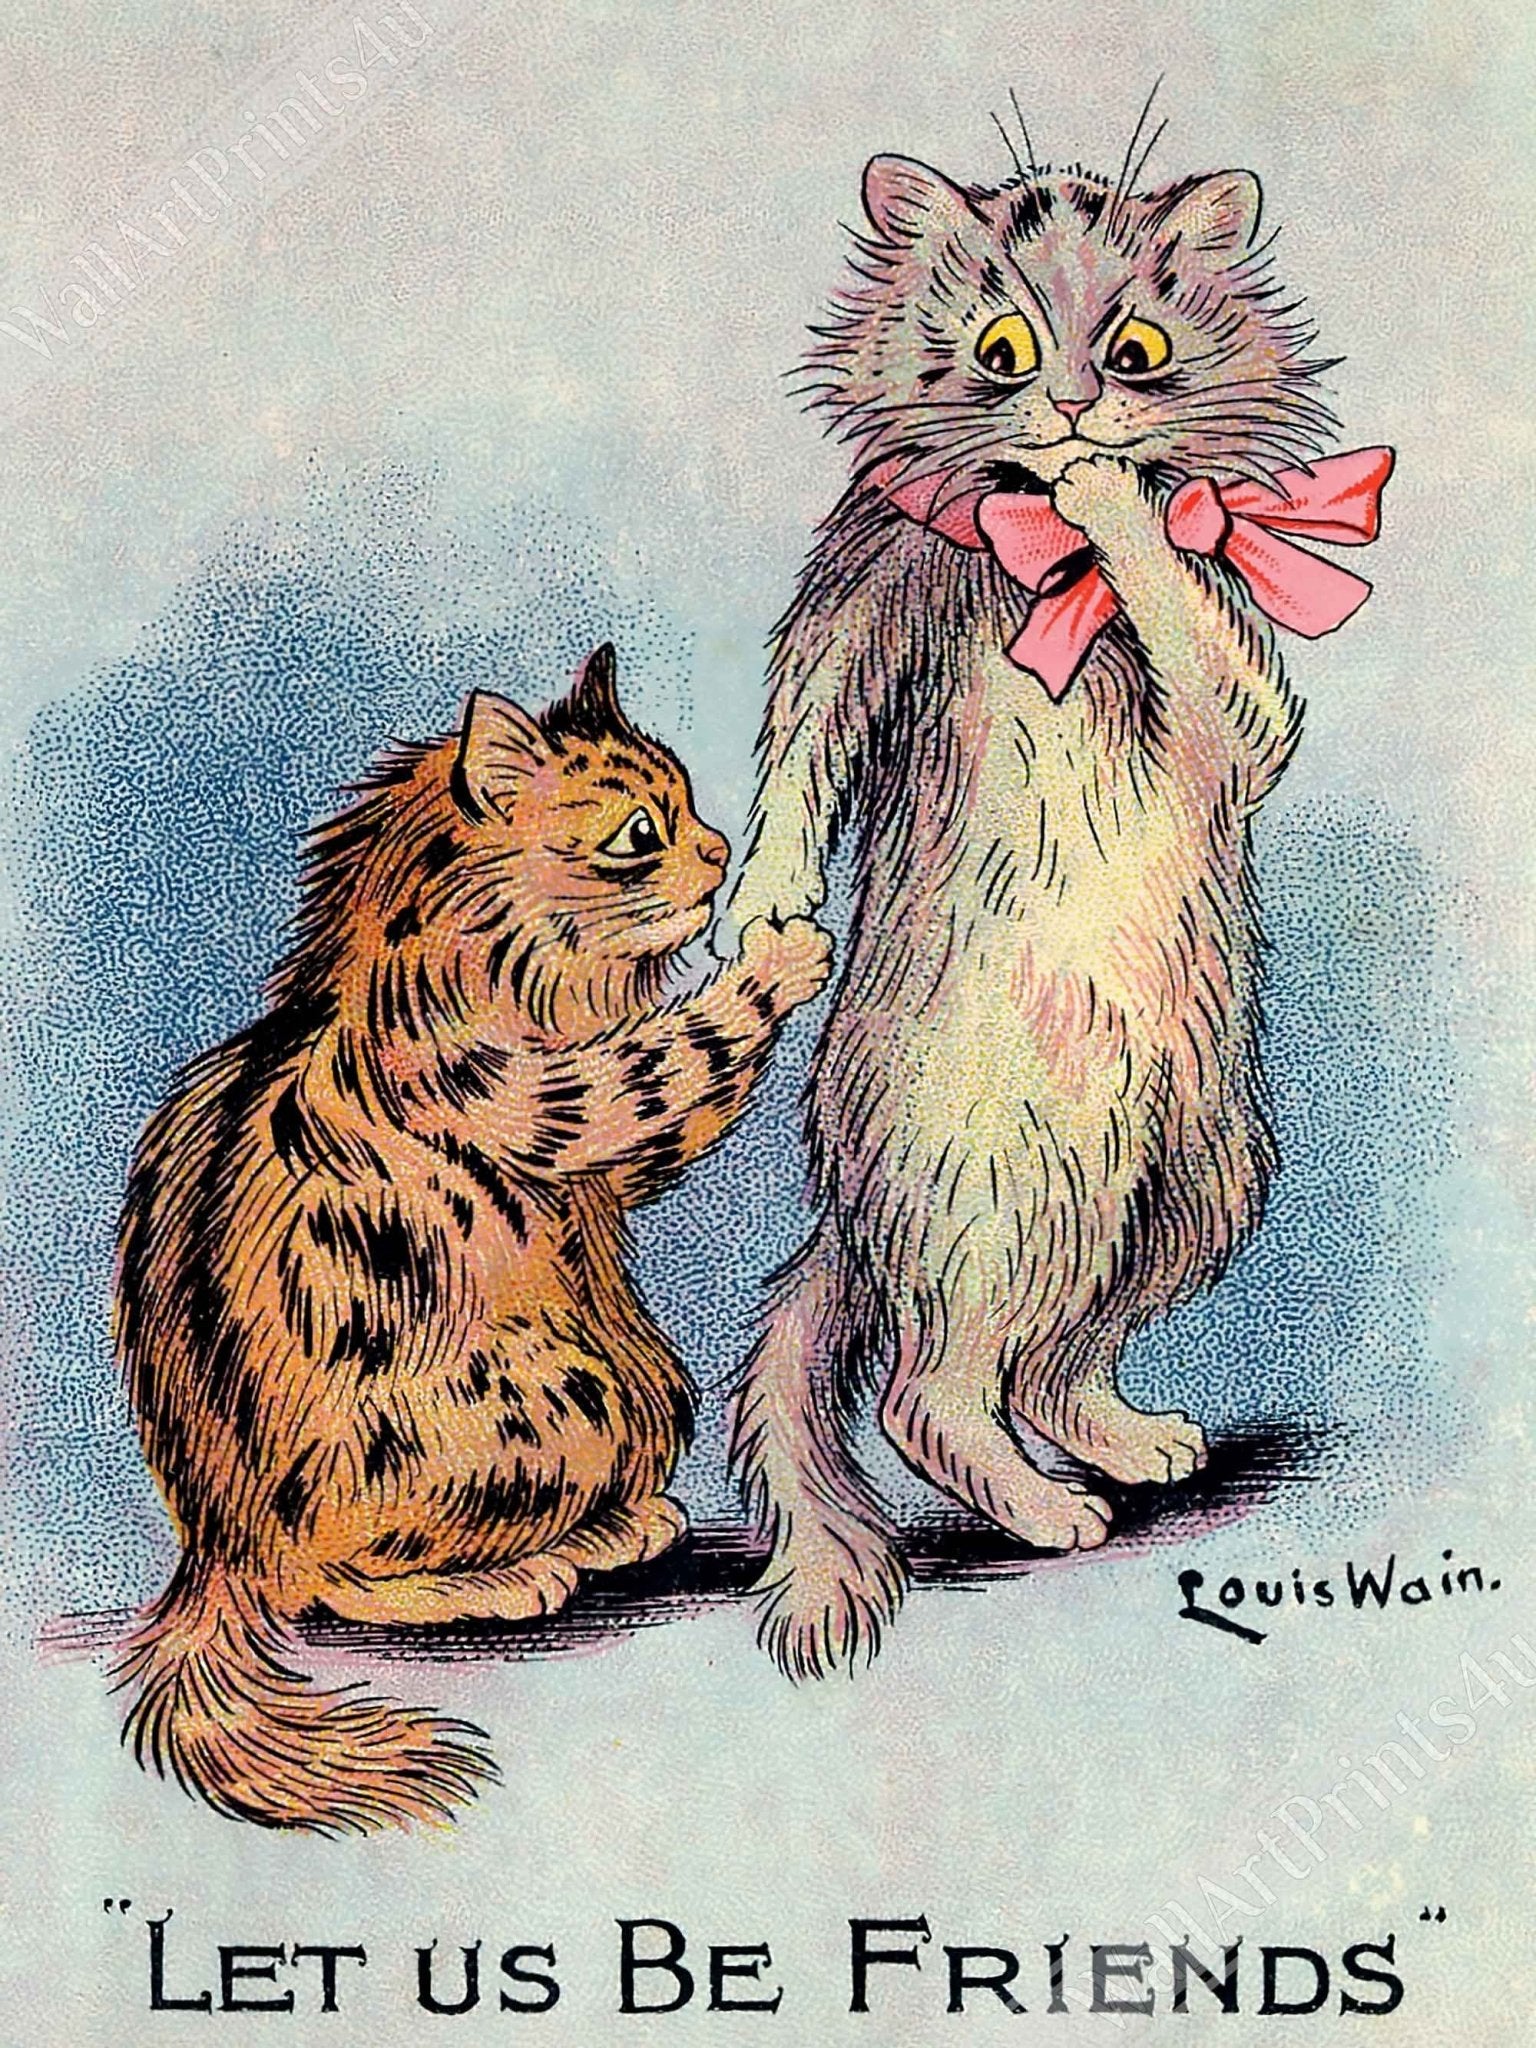 Louis Wain Print - Lets Be Friends Cats - Louis Wain Cat Poster - WallArtPrints4U